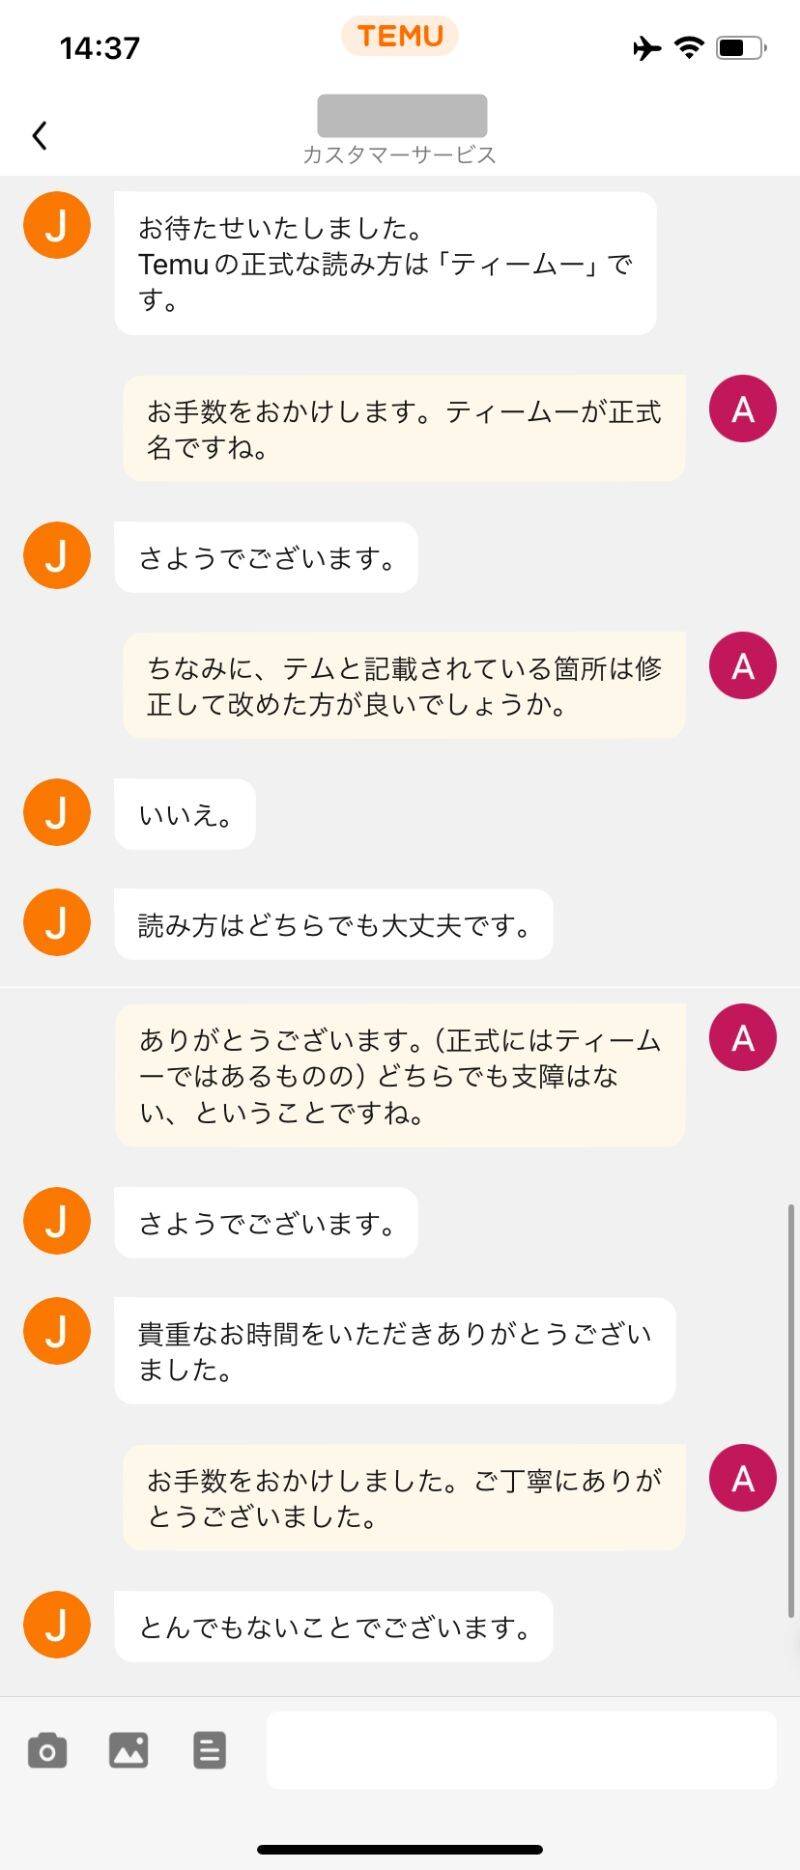 Temu・カスタマーサービス問い合わせ